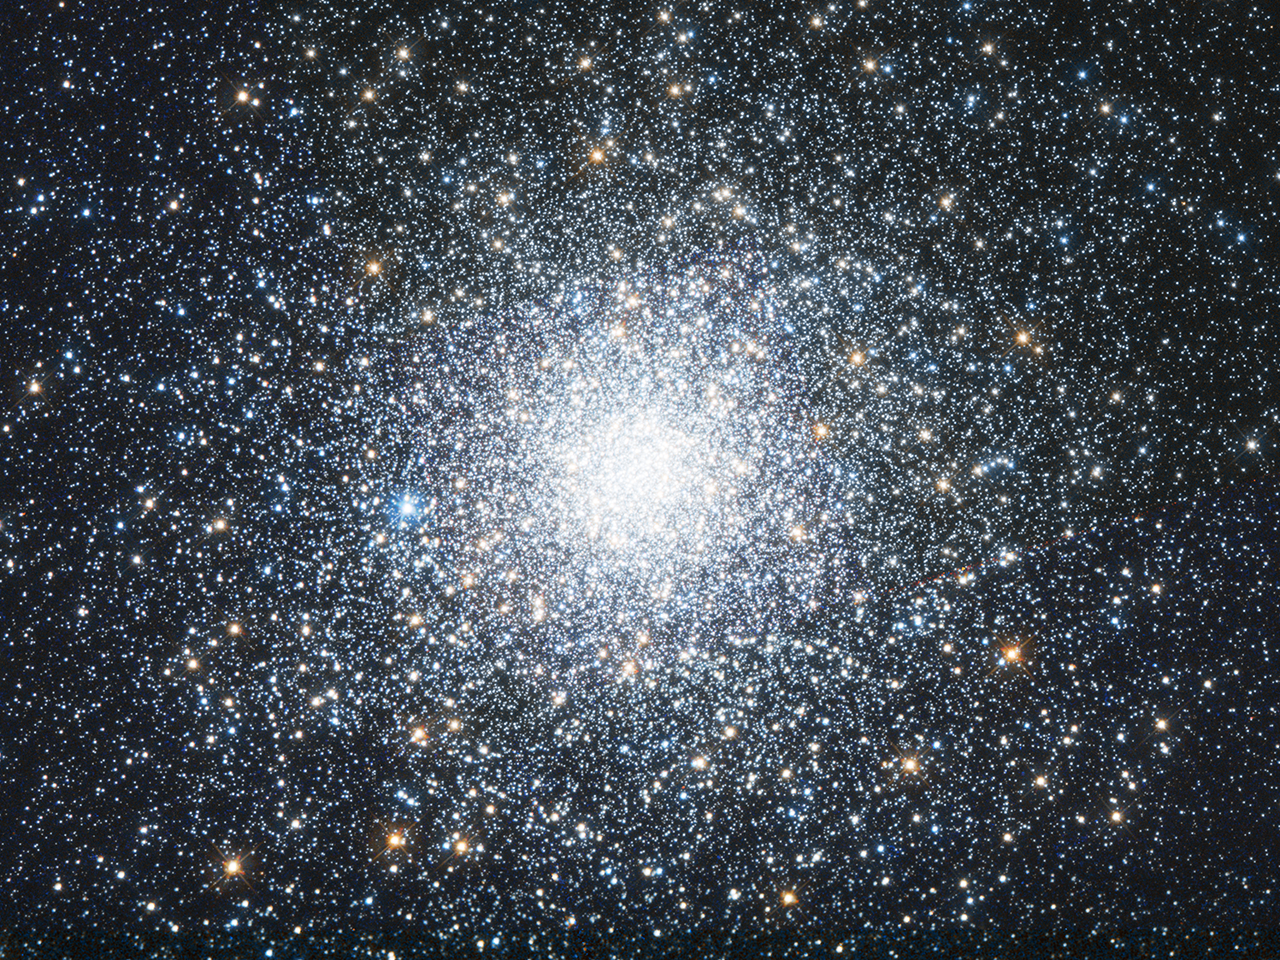 Hubble image of M75